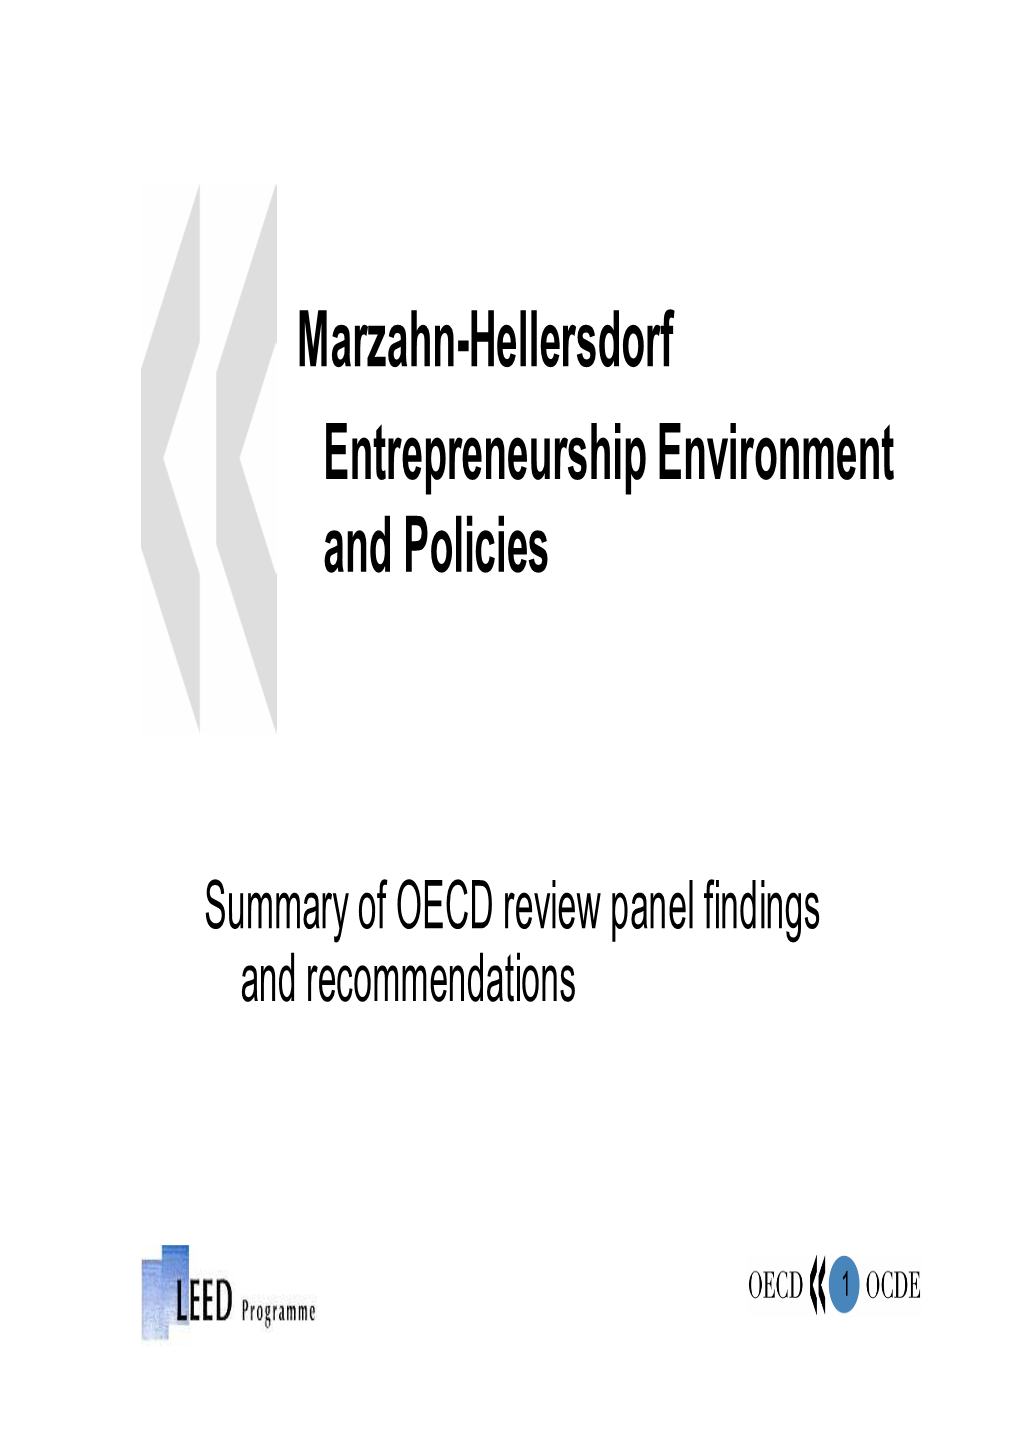 Marzahn-Hellersdorf Entrepreneurship Environment and Policies